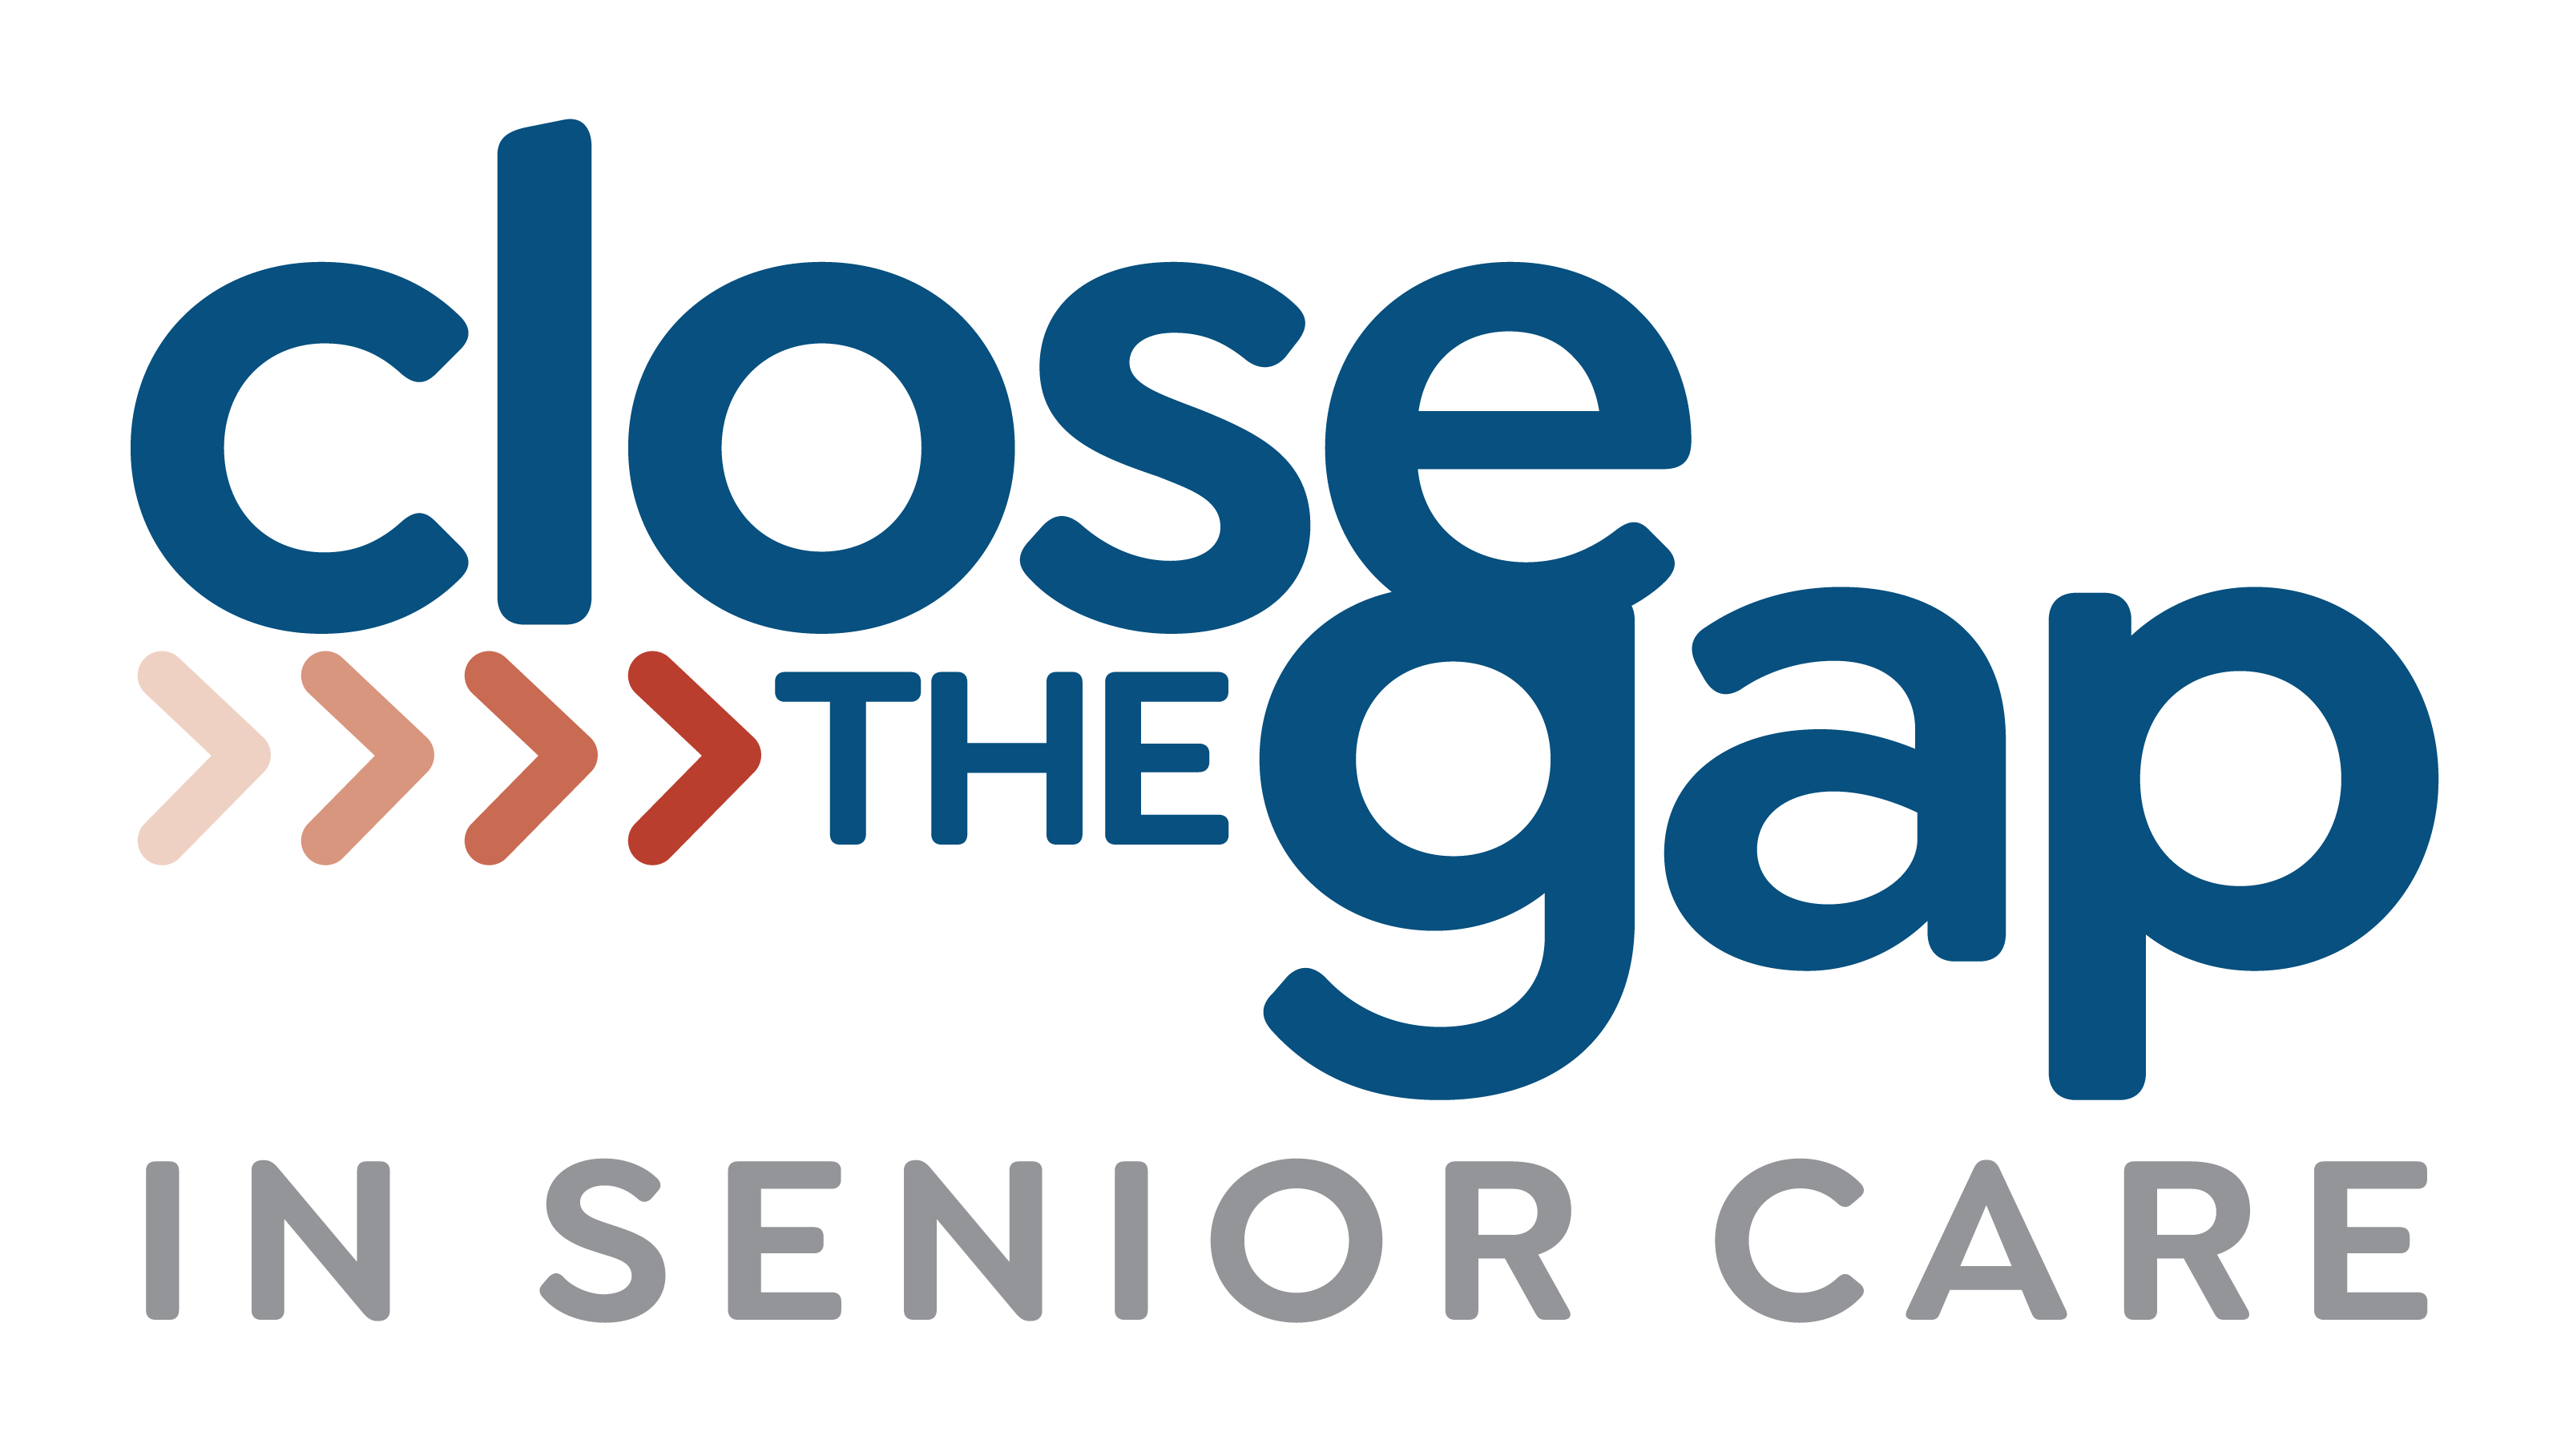 Close the Gap in Senior Care – Donate to Help Prevent Falls